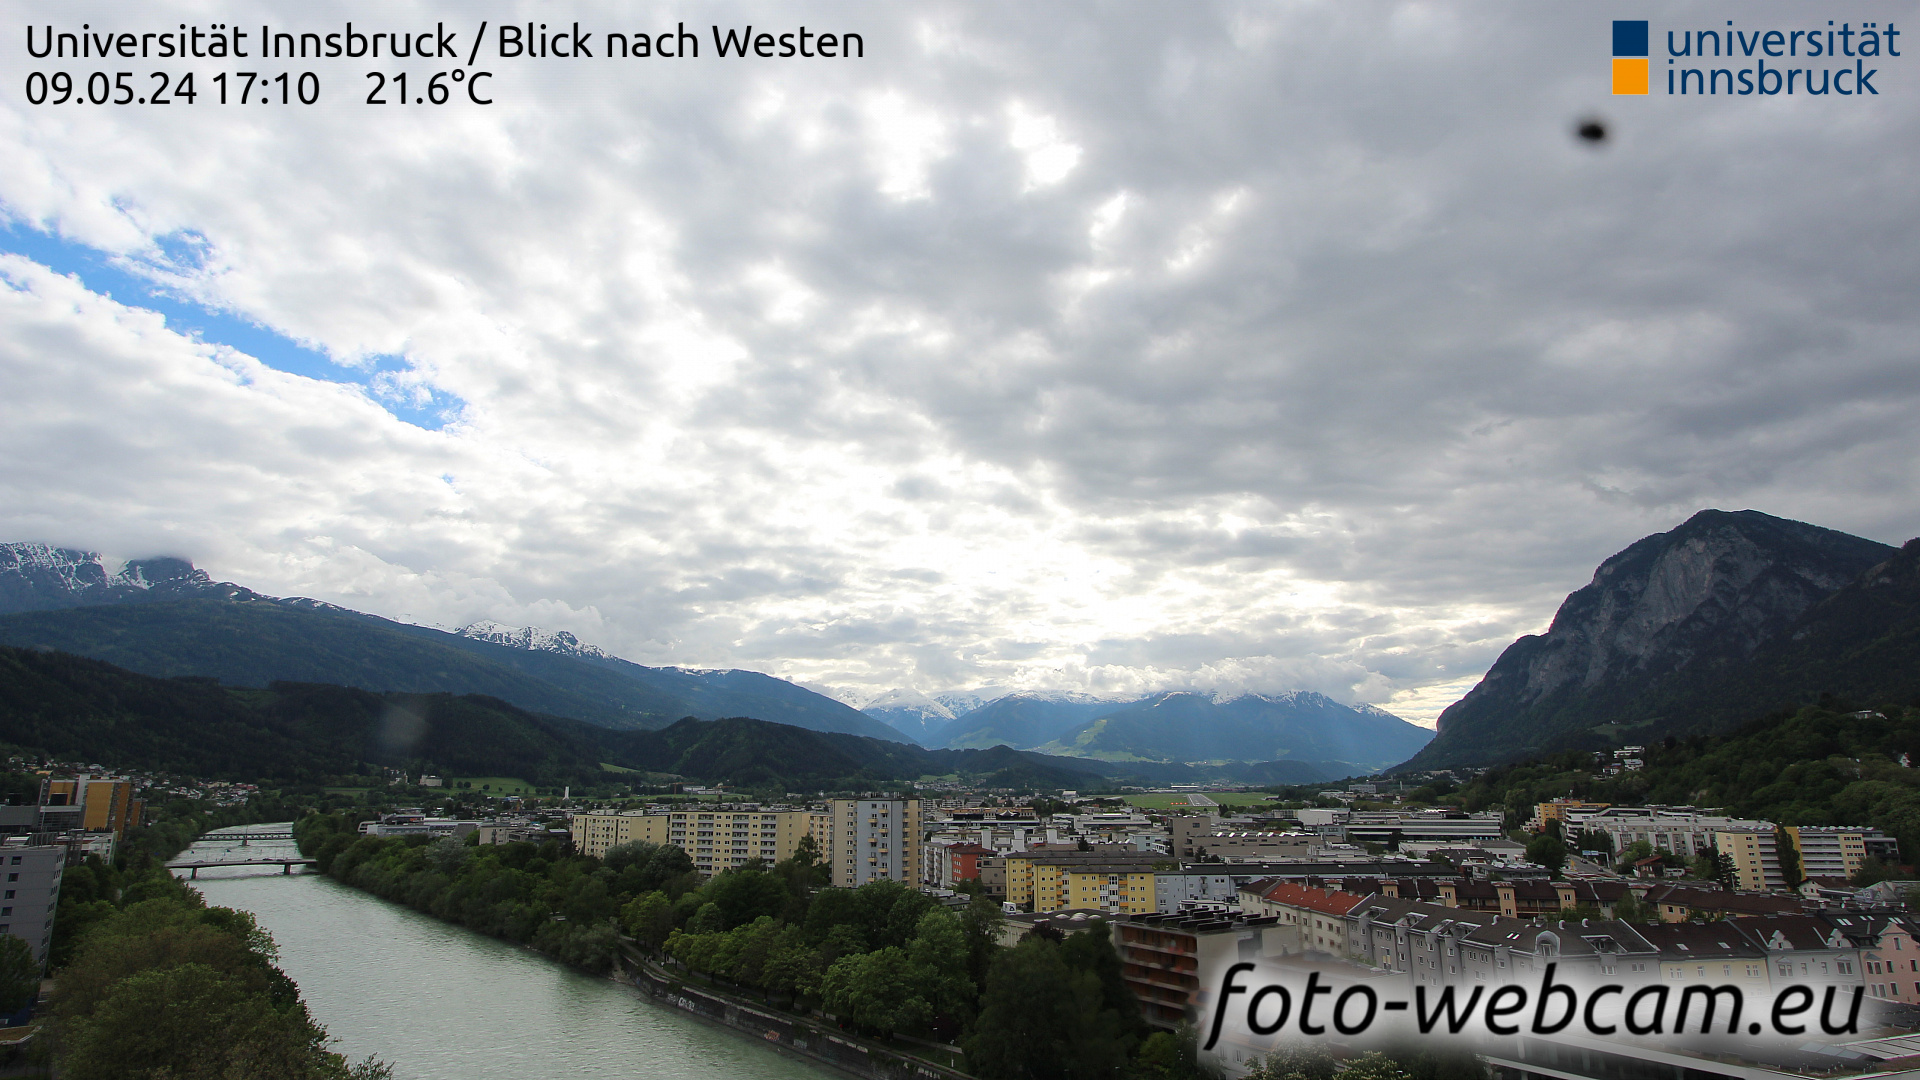 Innsbruck Gio. 17:17